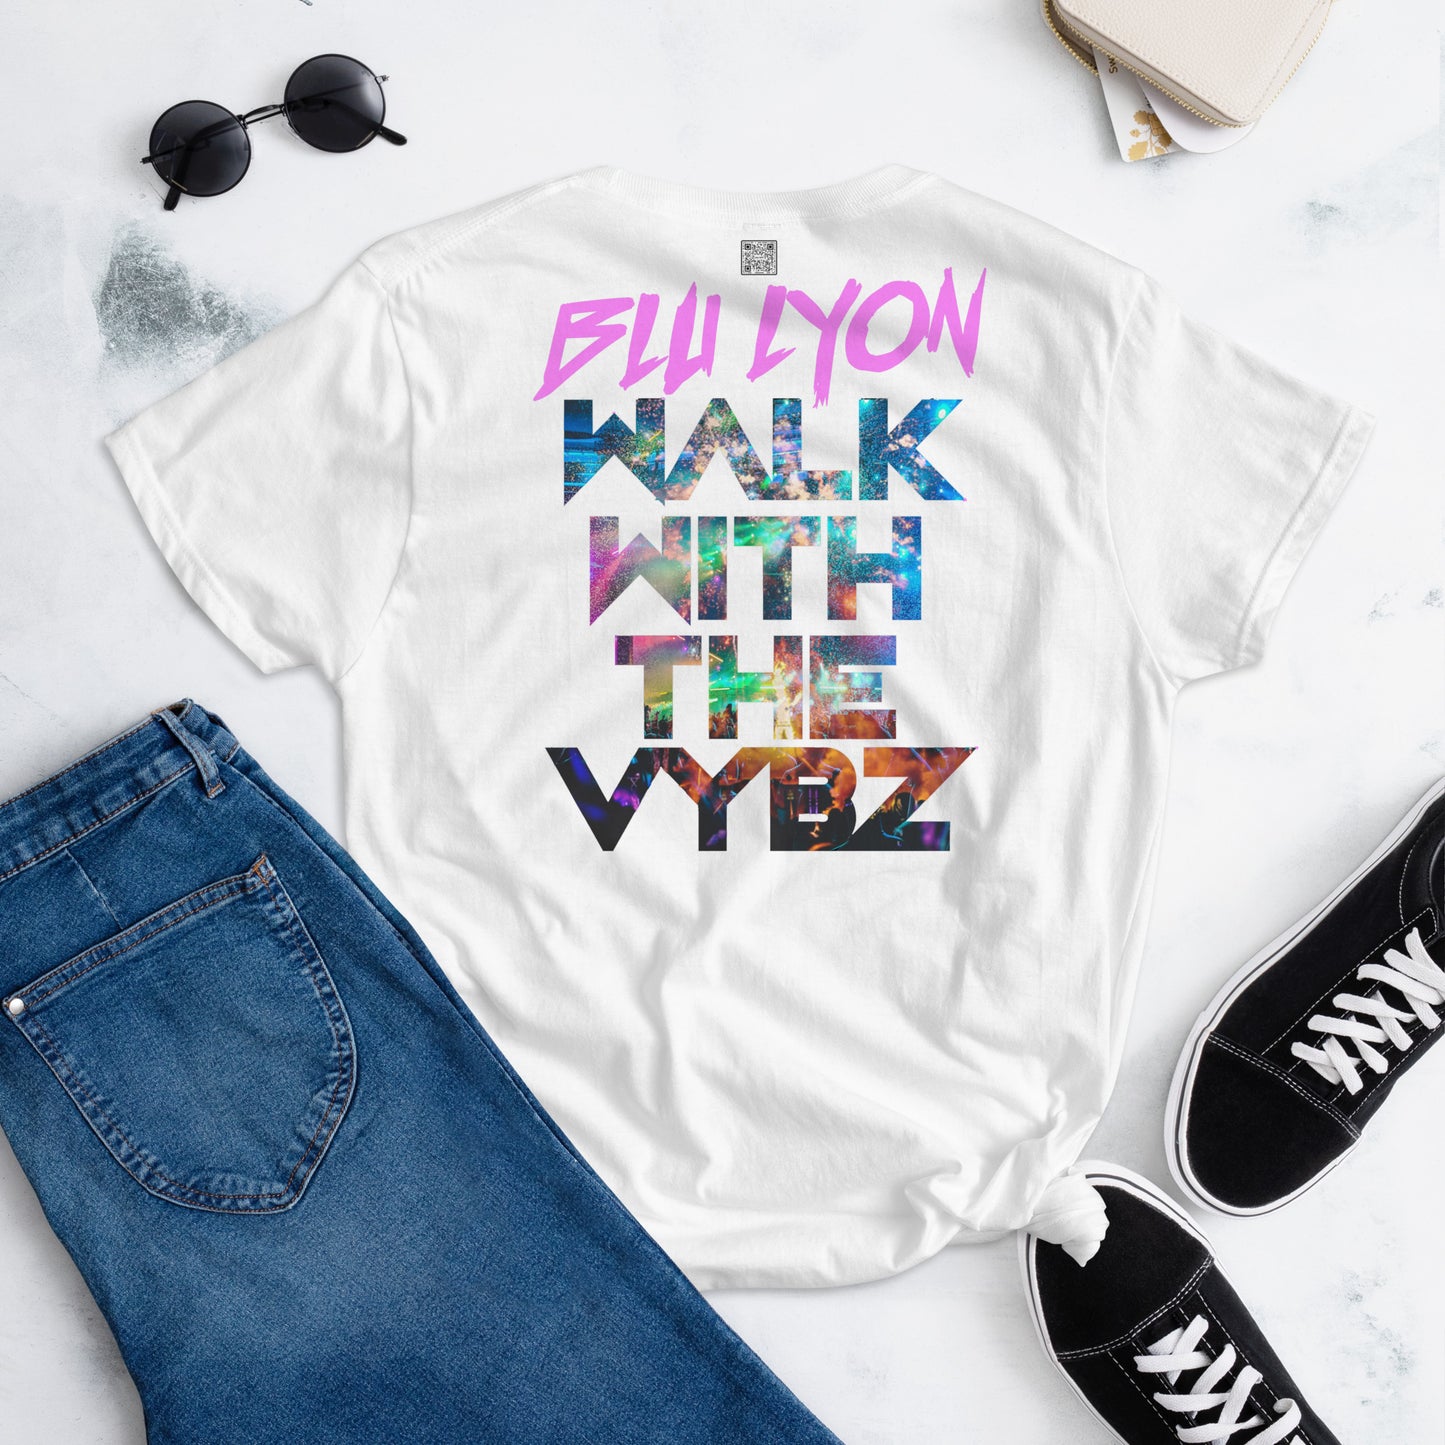 Walk With The Vybz Women's short sleeve t-shirt